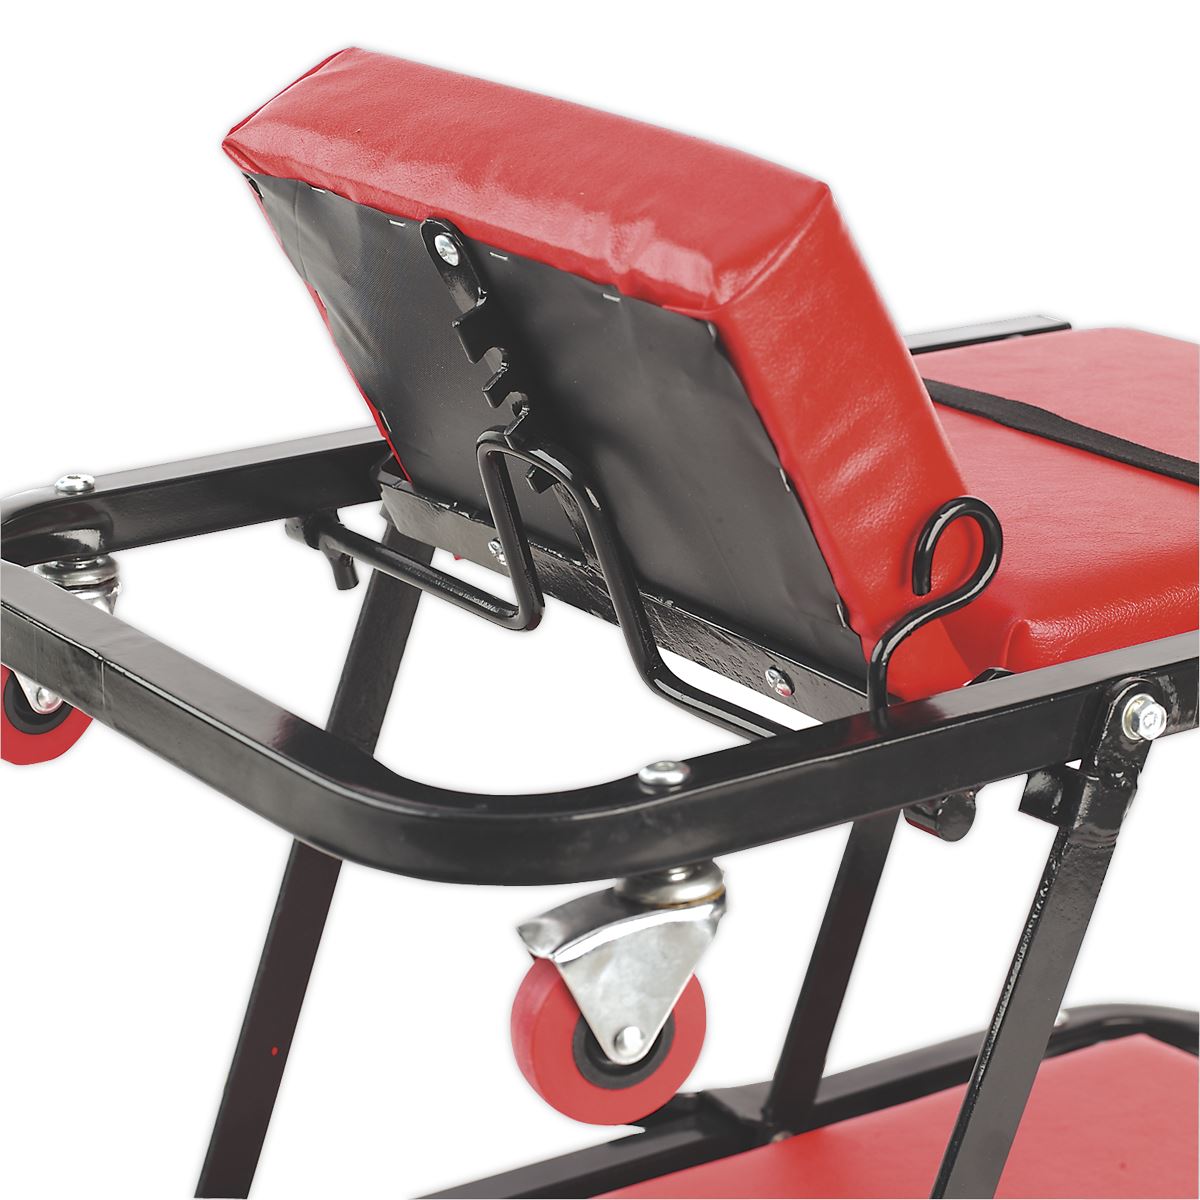 Sealey Creeper/Seat Steel with 7 Wheels & Adjustable Head Rest